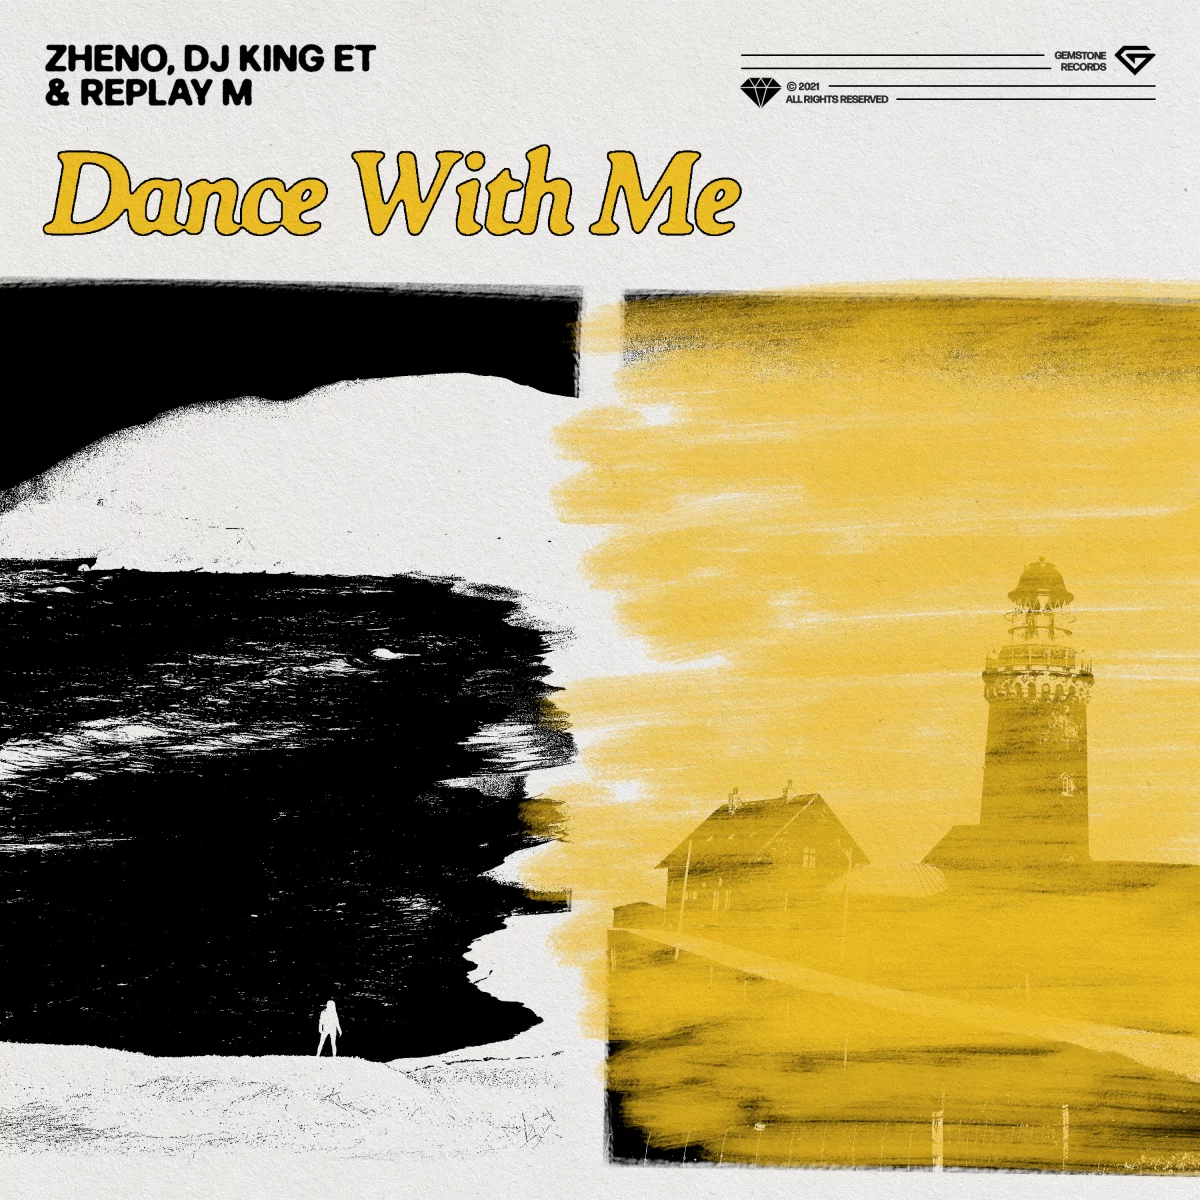 Dance With Me - Zheno⁠, Dj King ET⁠ & Replay M⁠ 